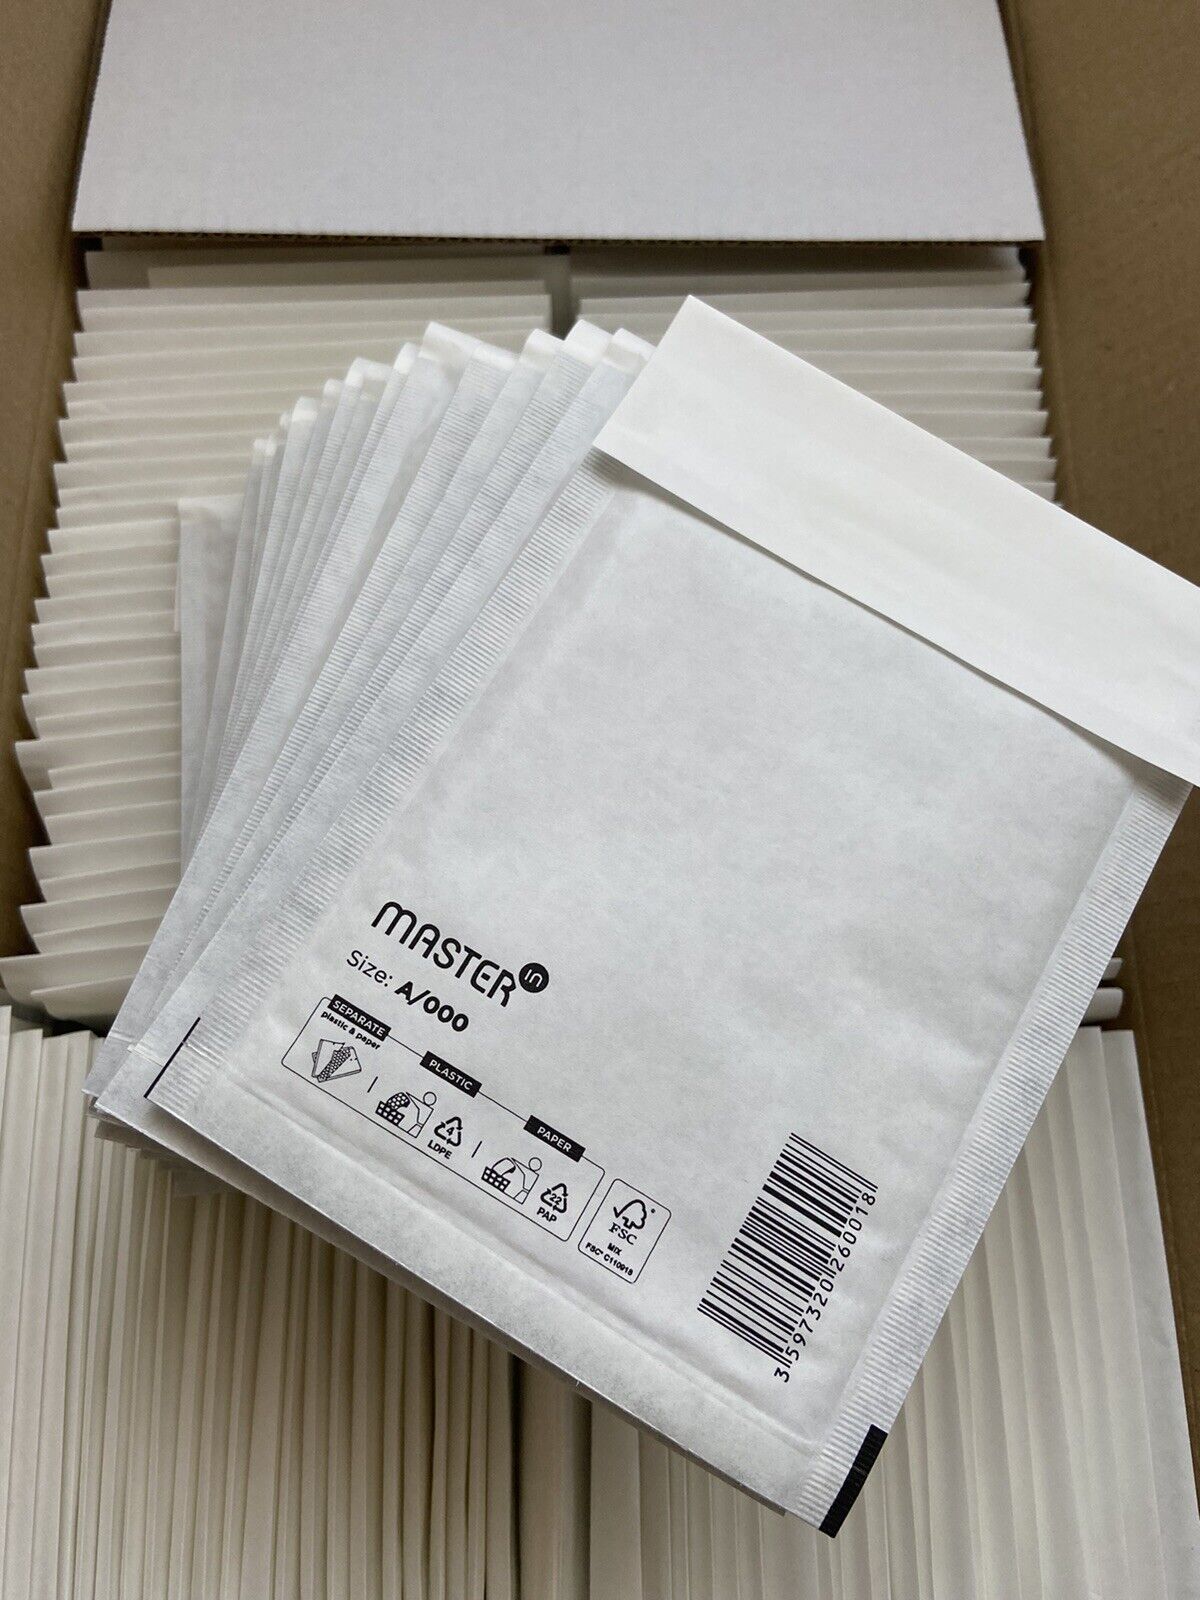 doe niet Ass Kijkgat 200 Mail Bubble Padded Envelopes Mailer Bags White A00 Strong 160x110 ⛔️⛔️  | eBay